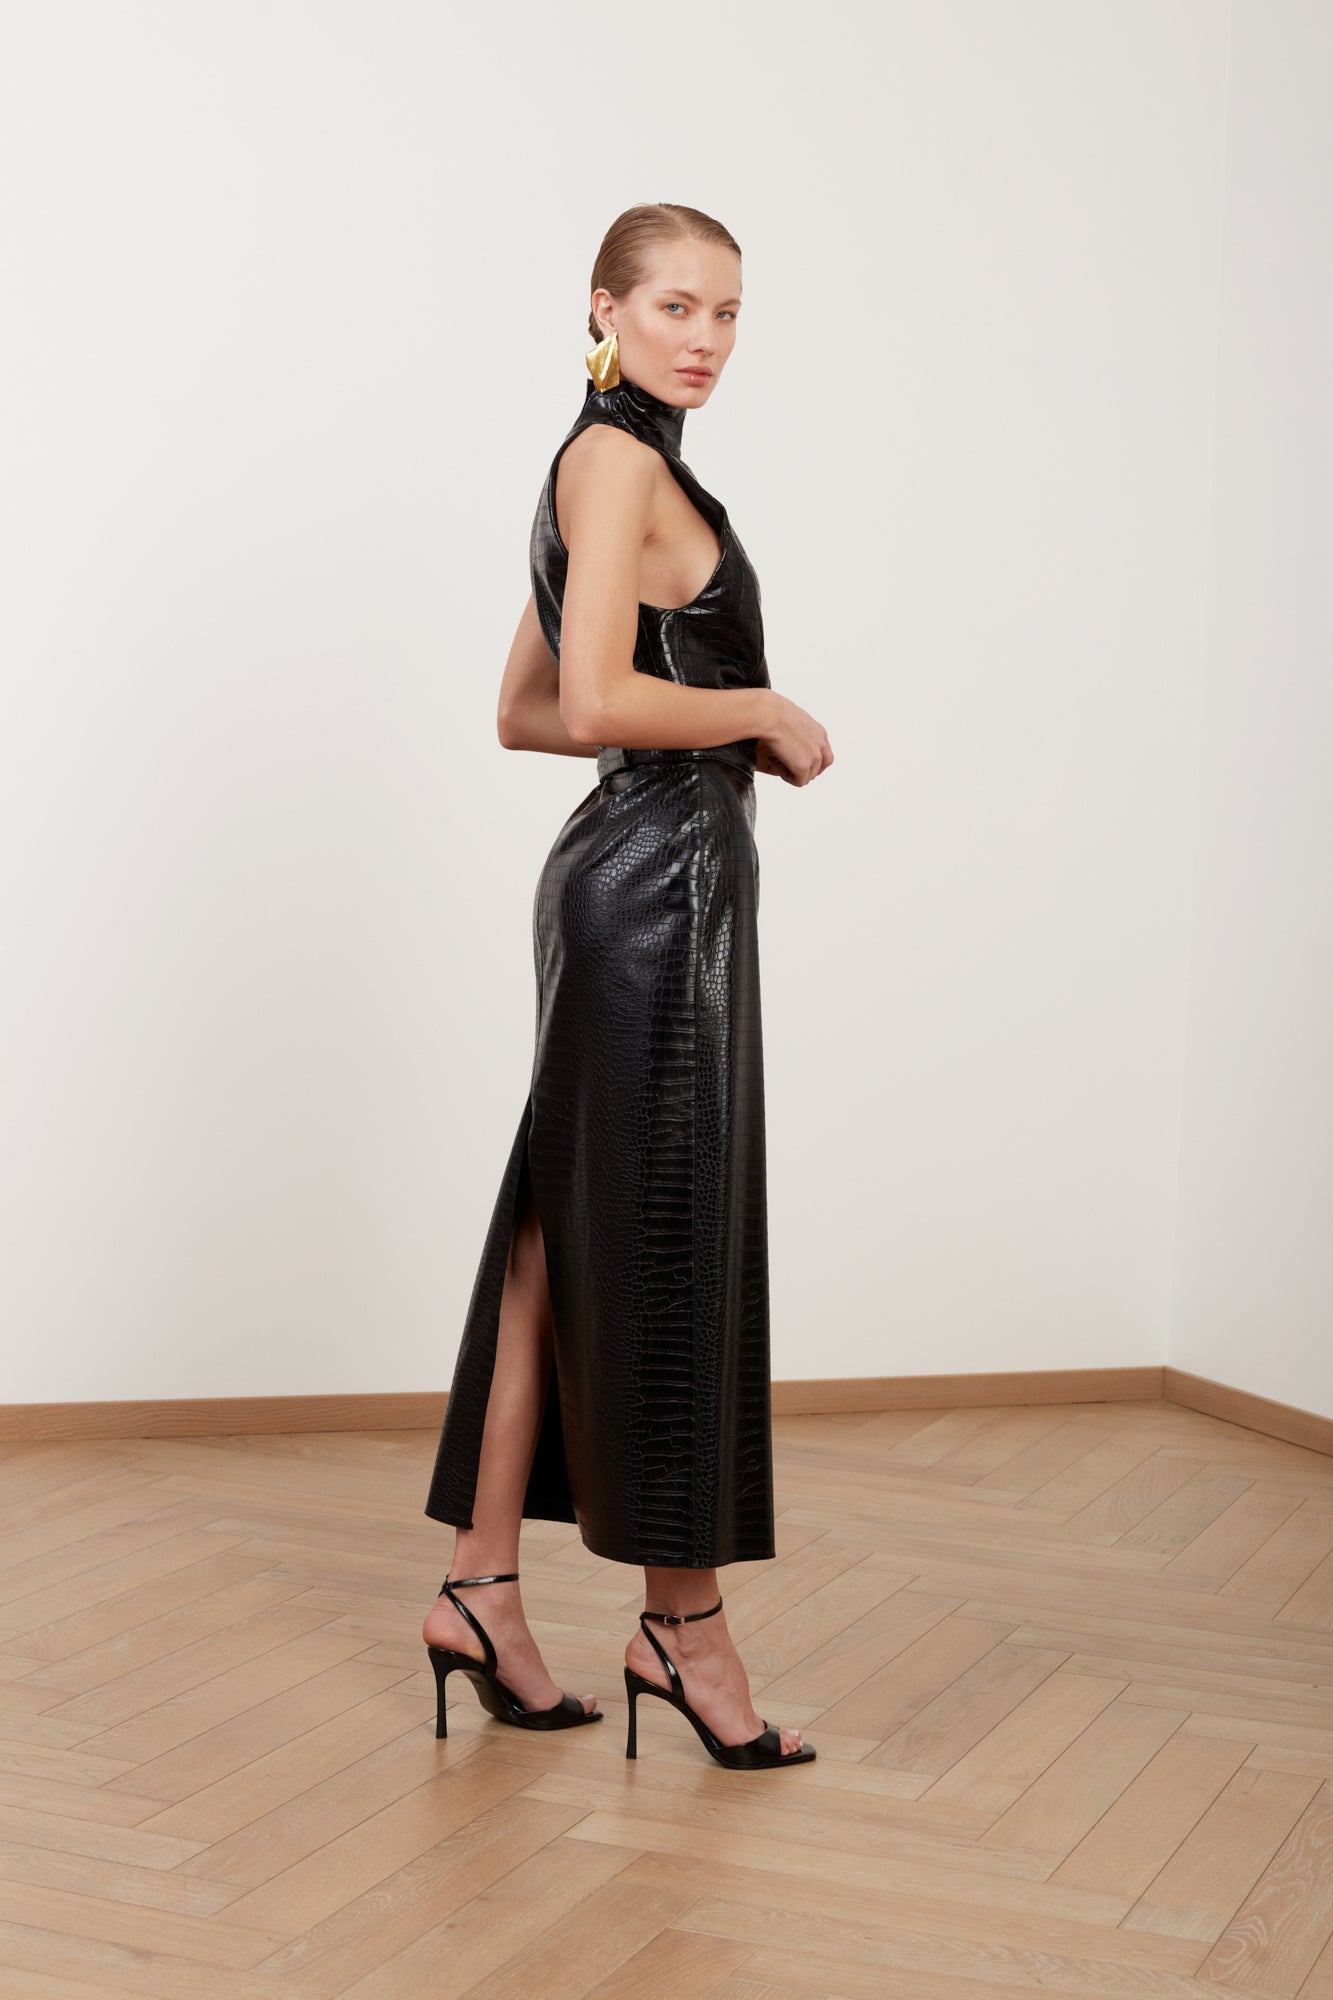 SENSA black textured vegan leather midi dress with turtleneck